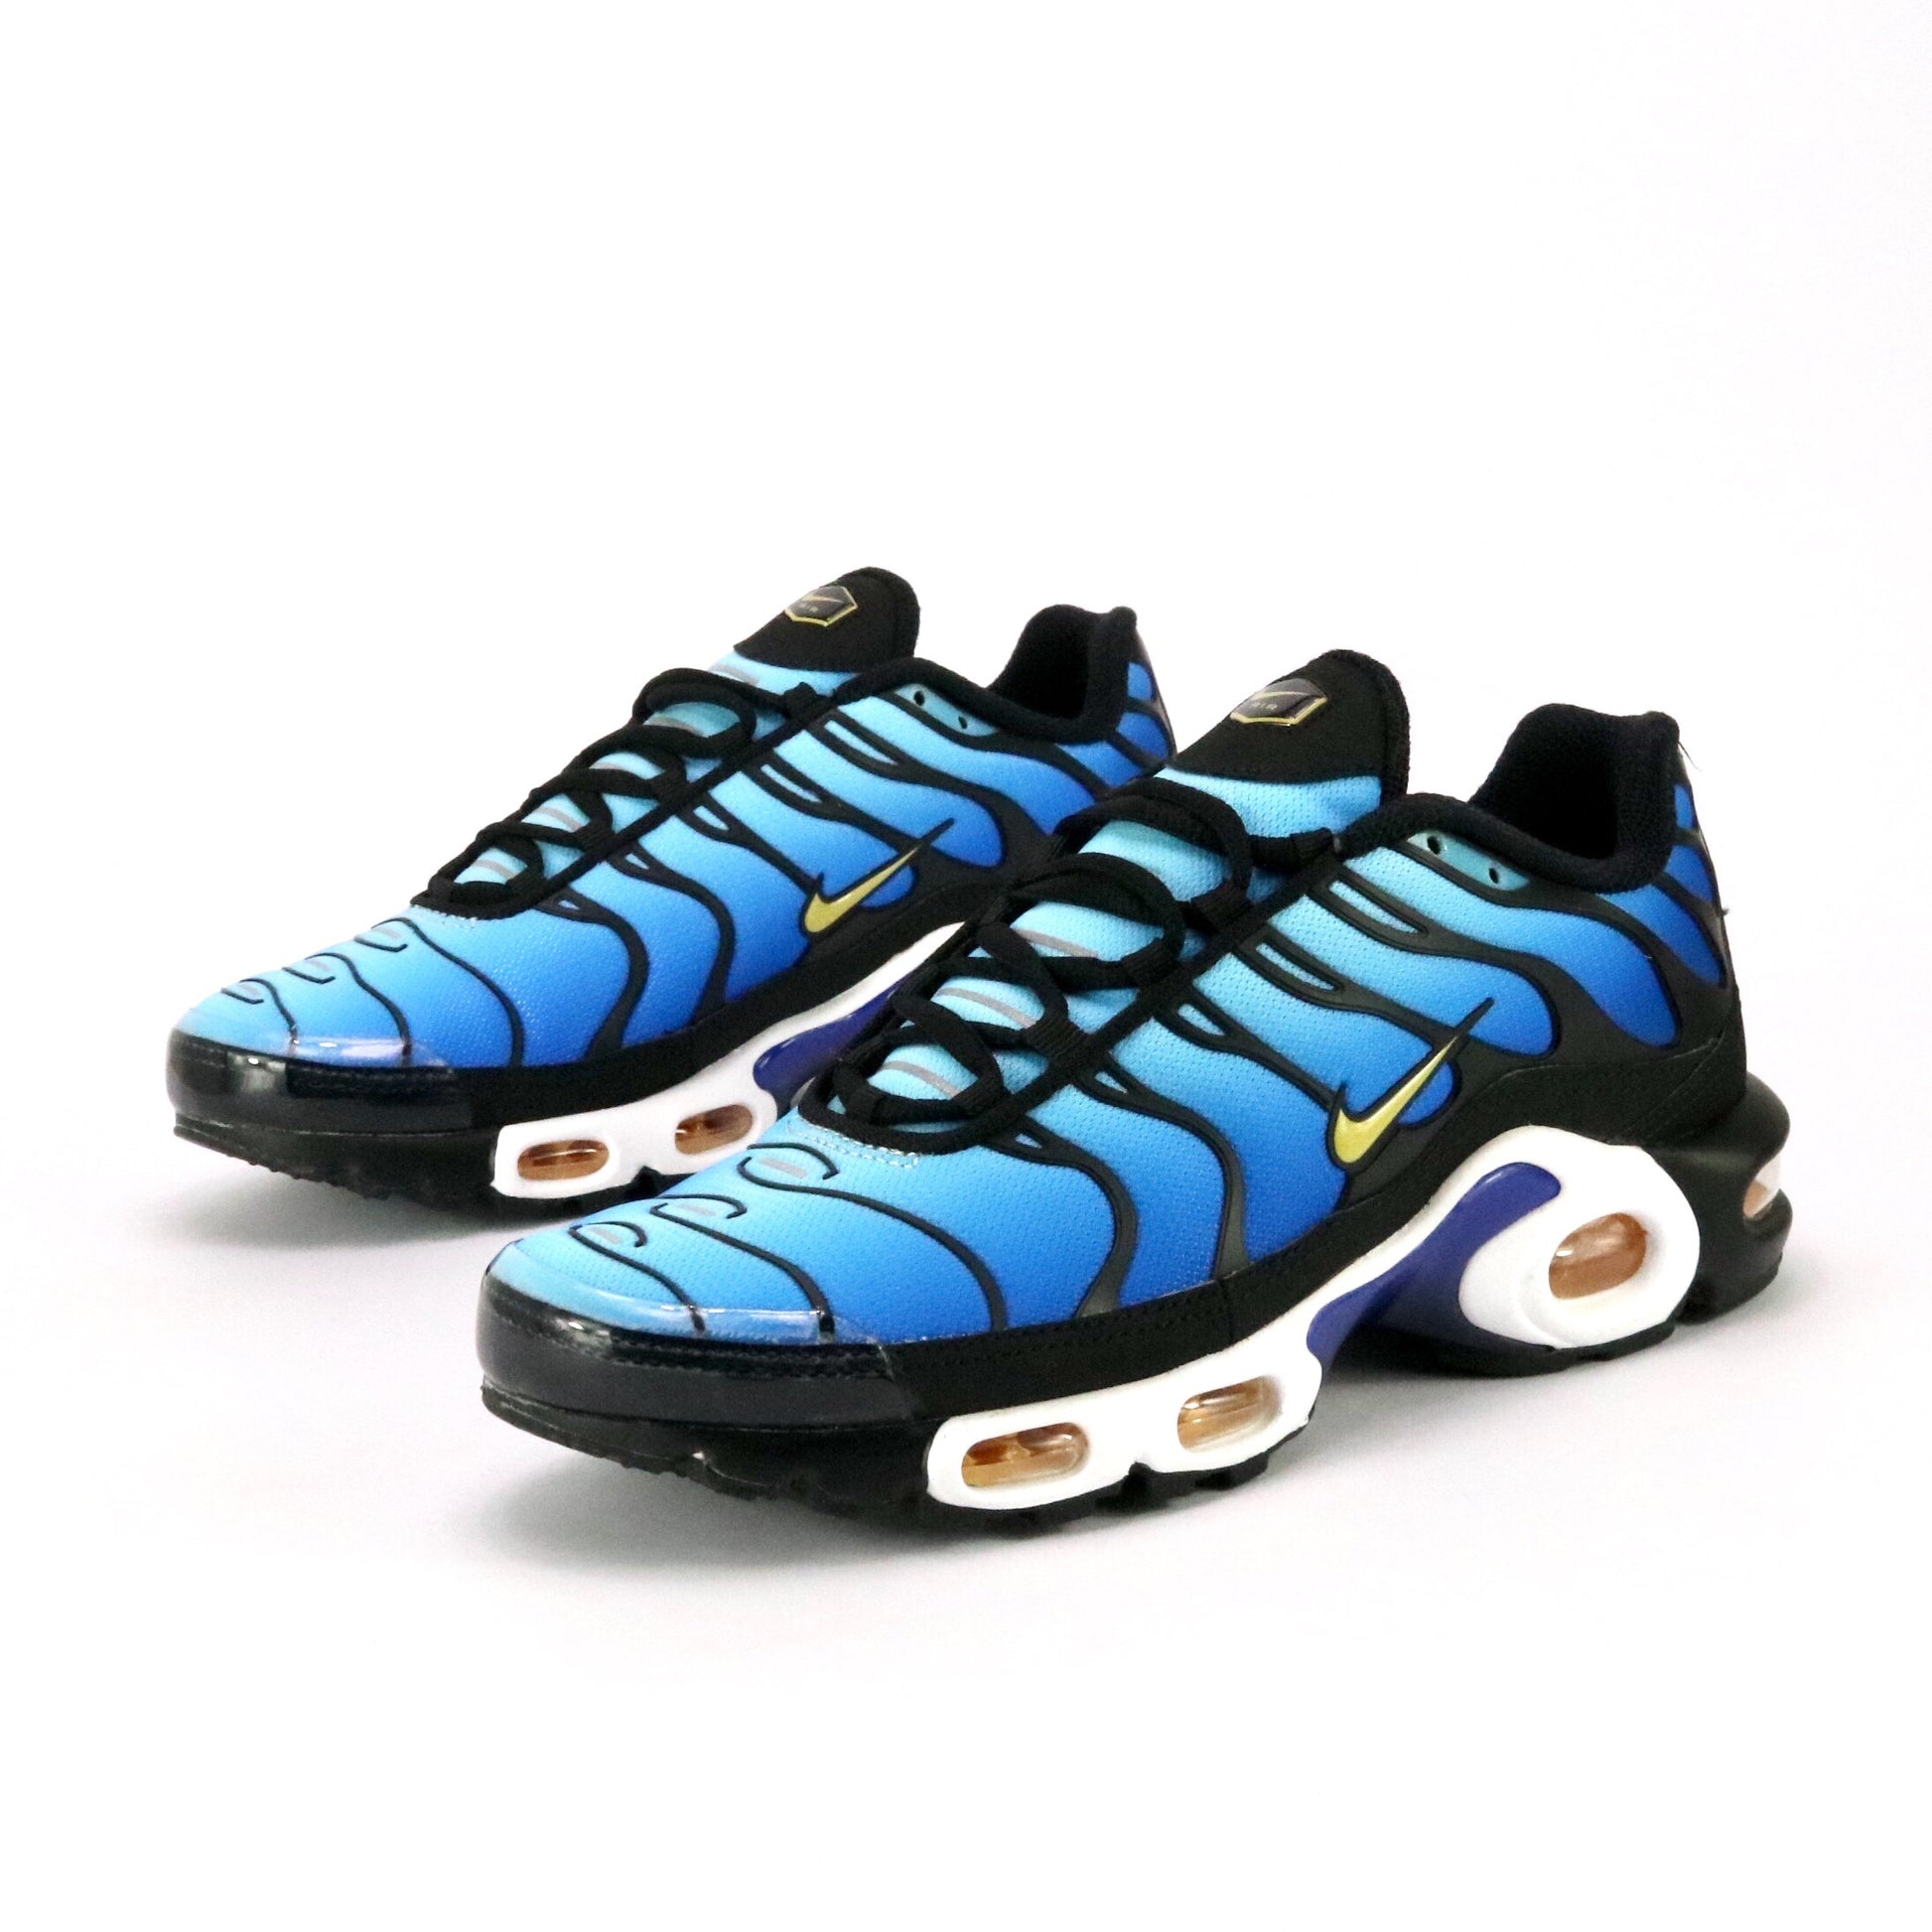 Nike Air Max Plus III Men’s Shoe - Black/Hyper Blue/White/Chamois - 10